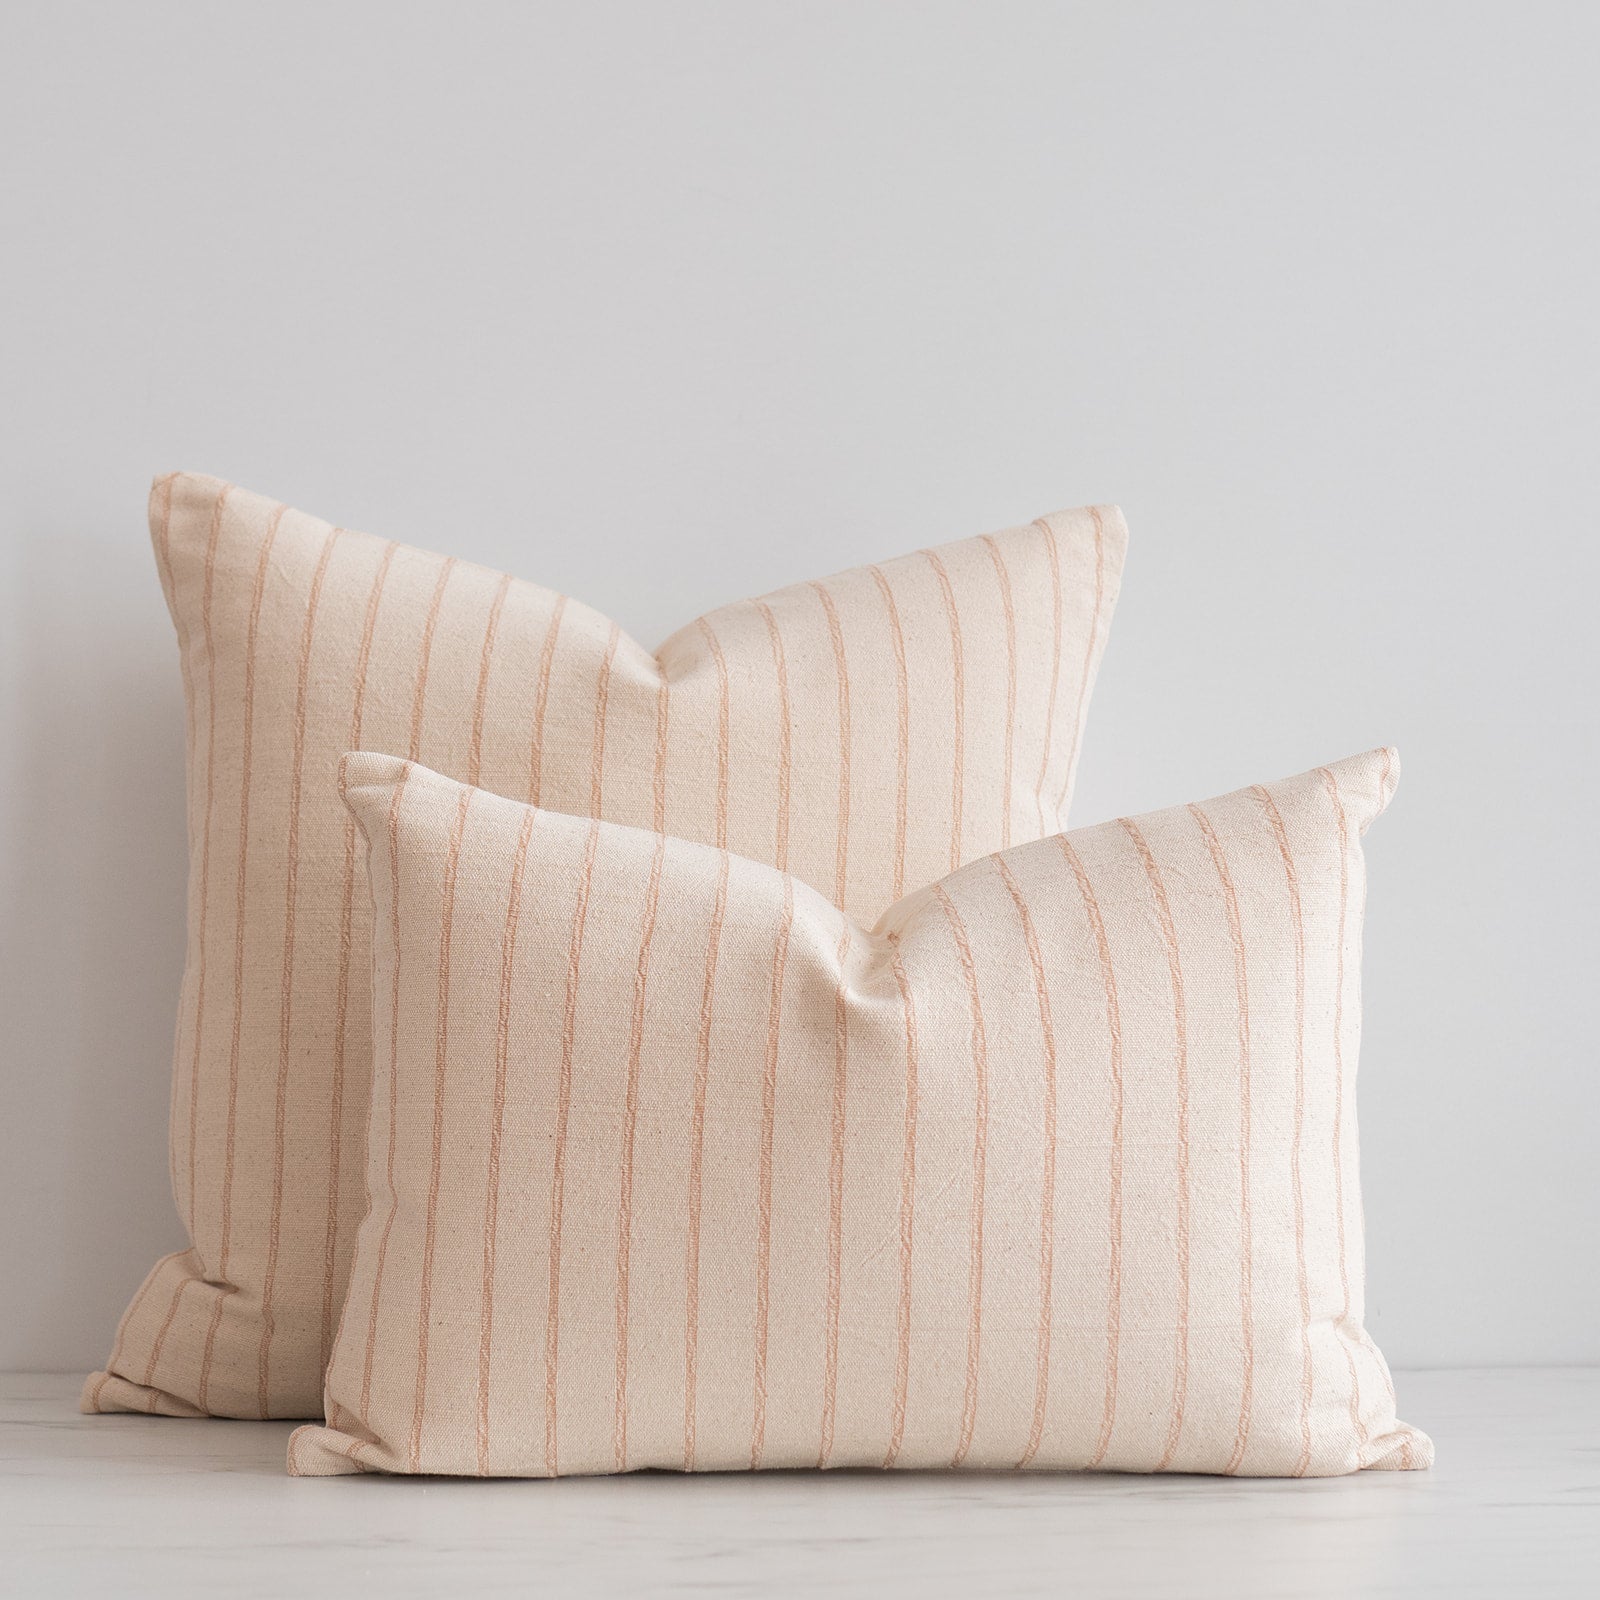 Terracotta Thai Woven Stripes Pillow Cover